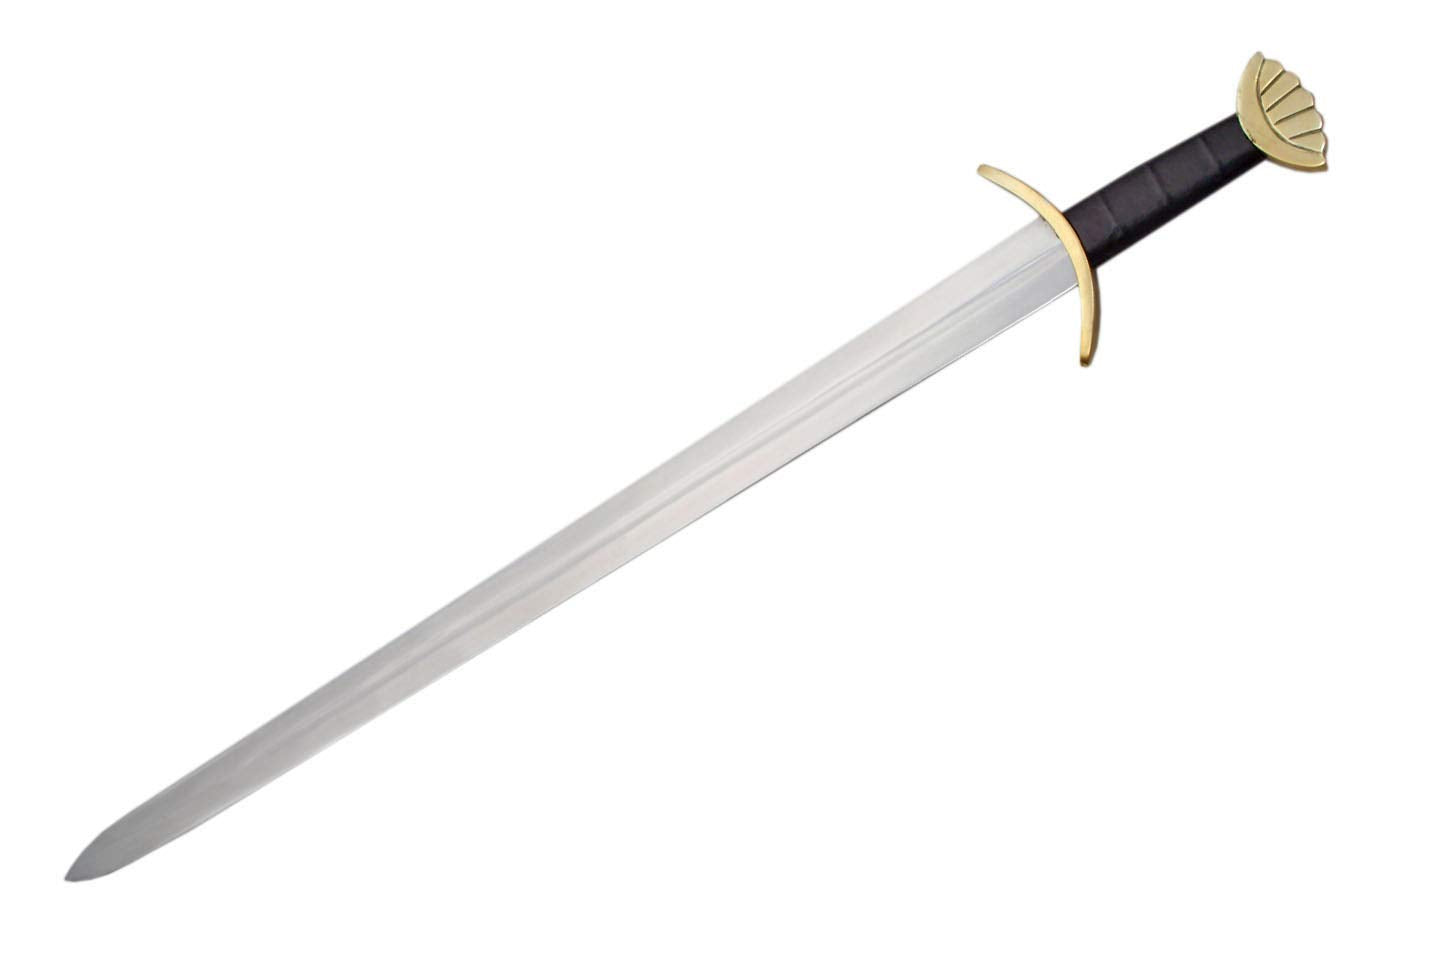 SZCO Supplies Viking Sword